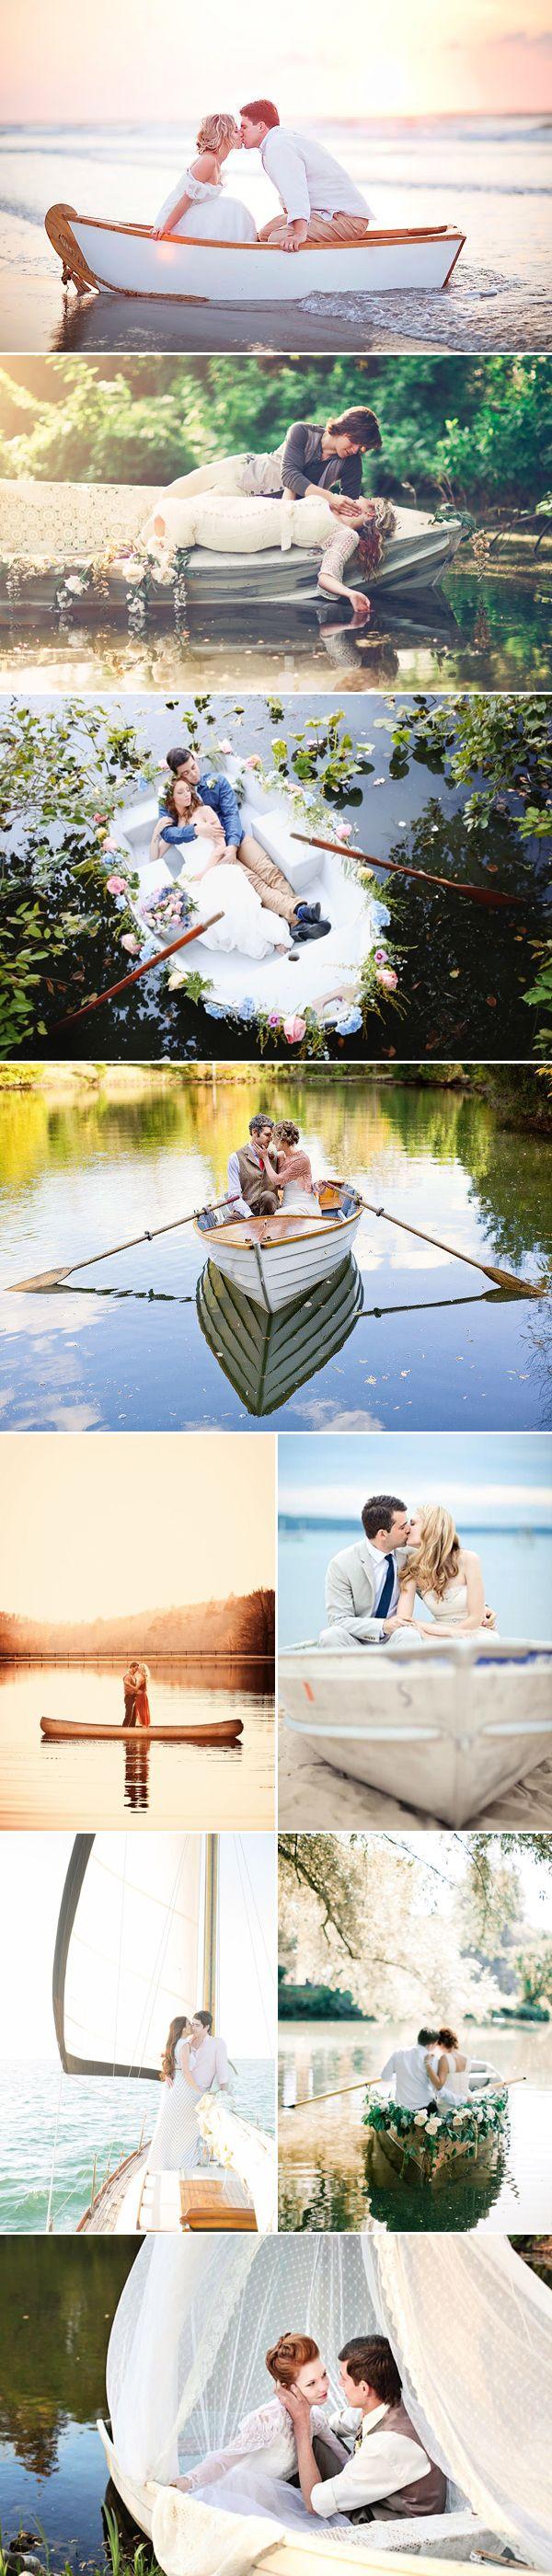 Wedding - Romantic Love-Boat Engagement Photo Ideas